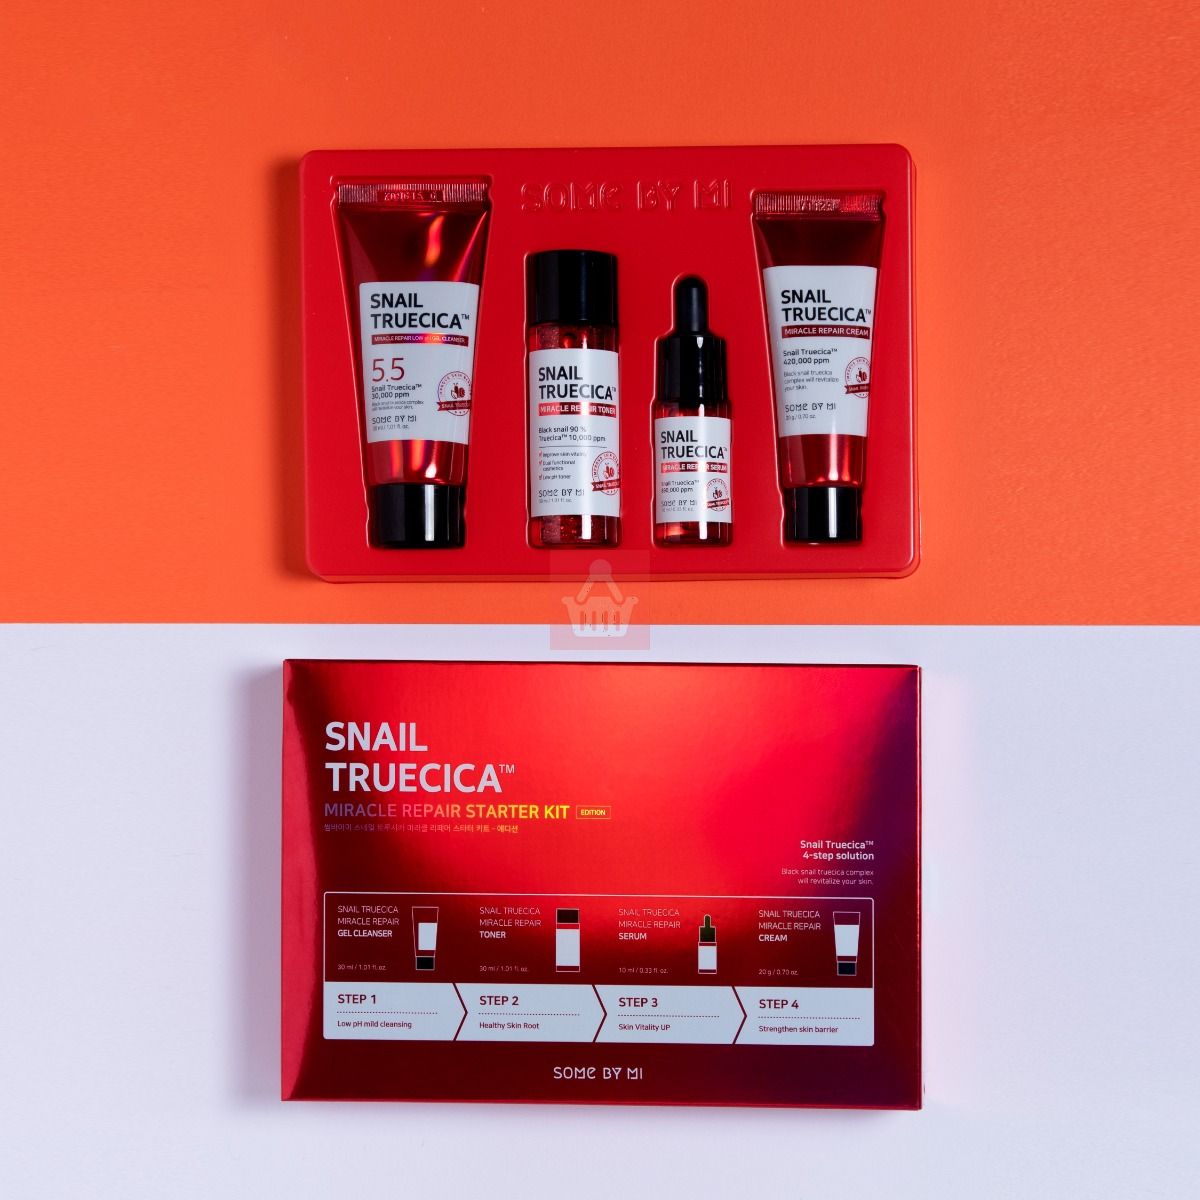 SOME BY MI - Snail Truecica Miracle Repair Starter Kit - Korea Cosmetics BN